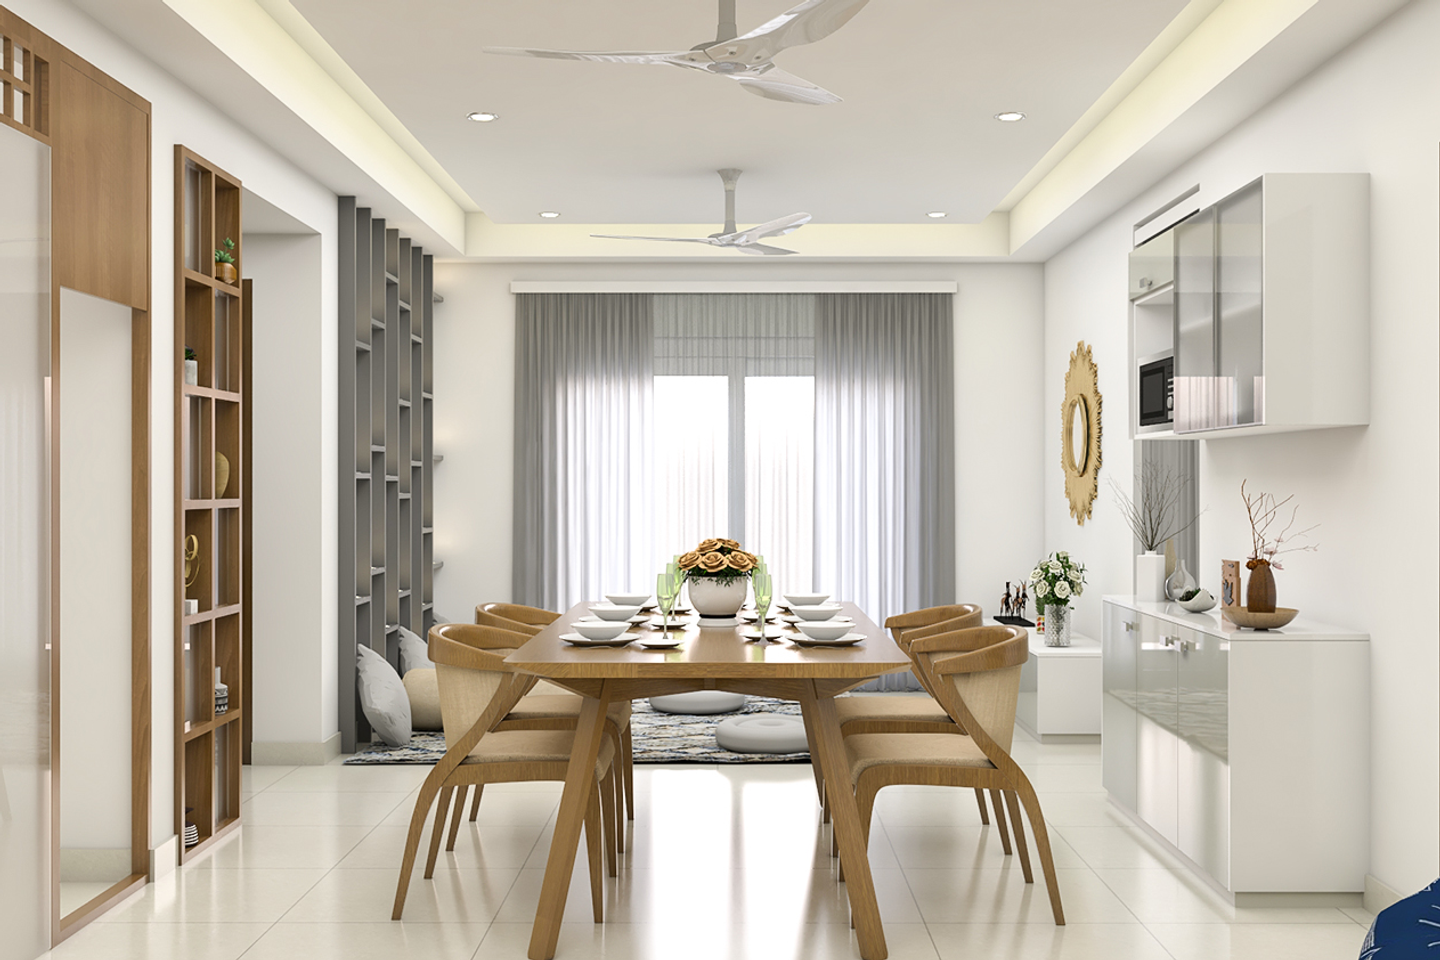 Convenient and Vibrant Dining Room Design Ideas - Livspace